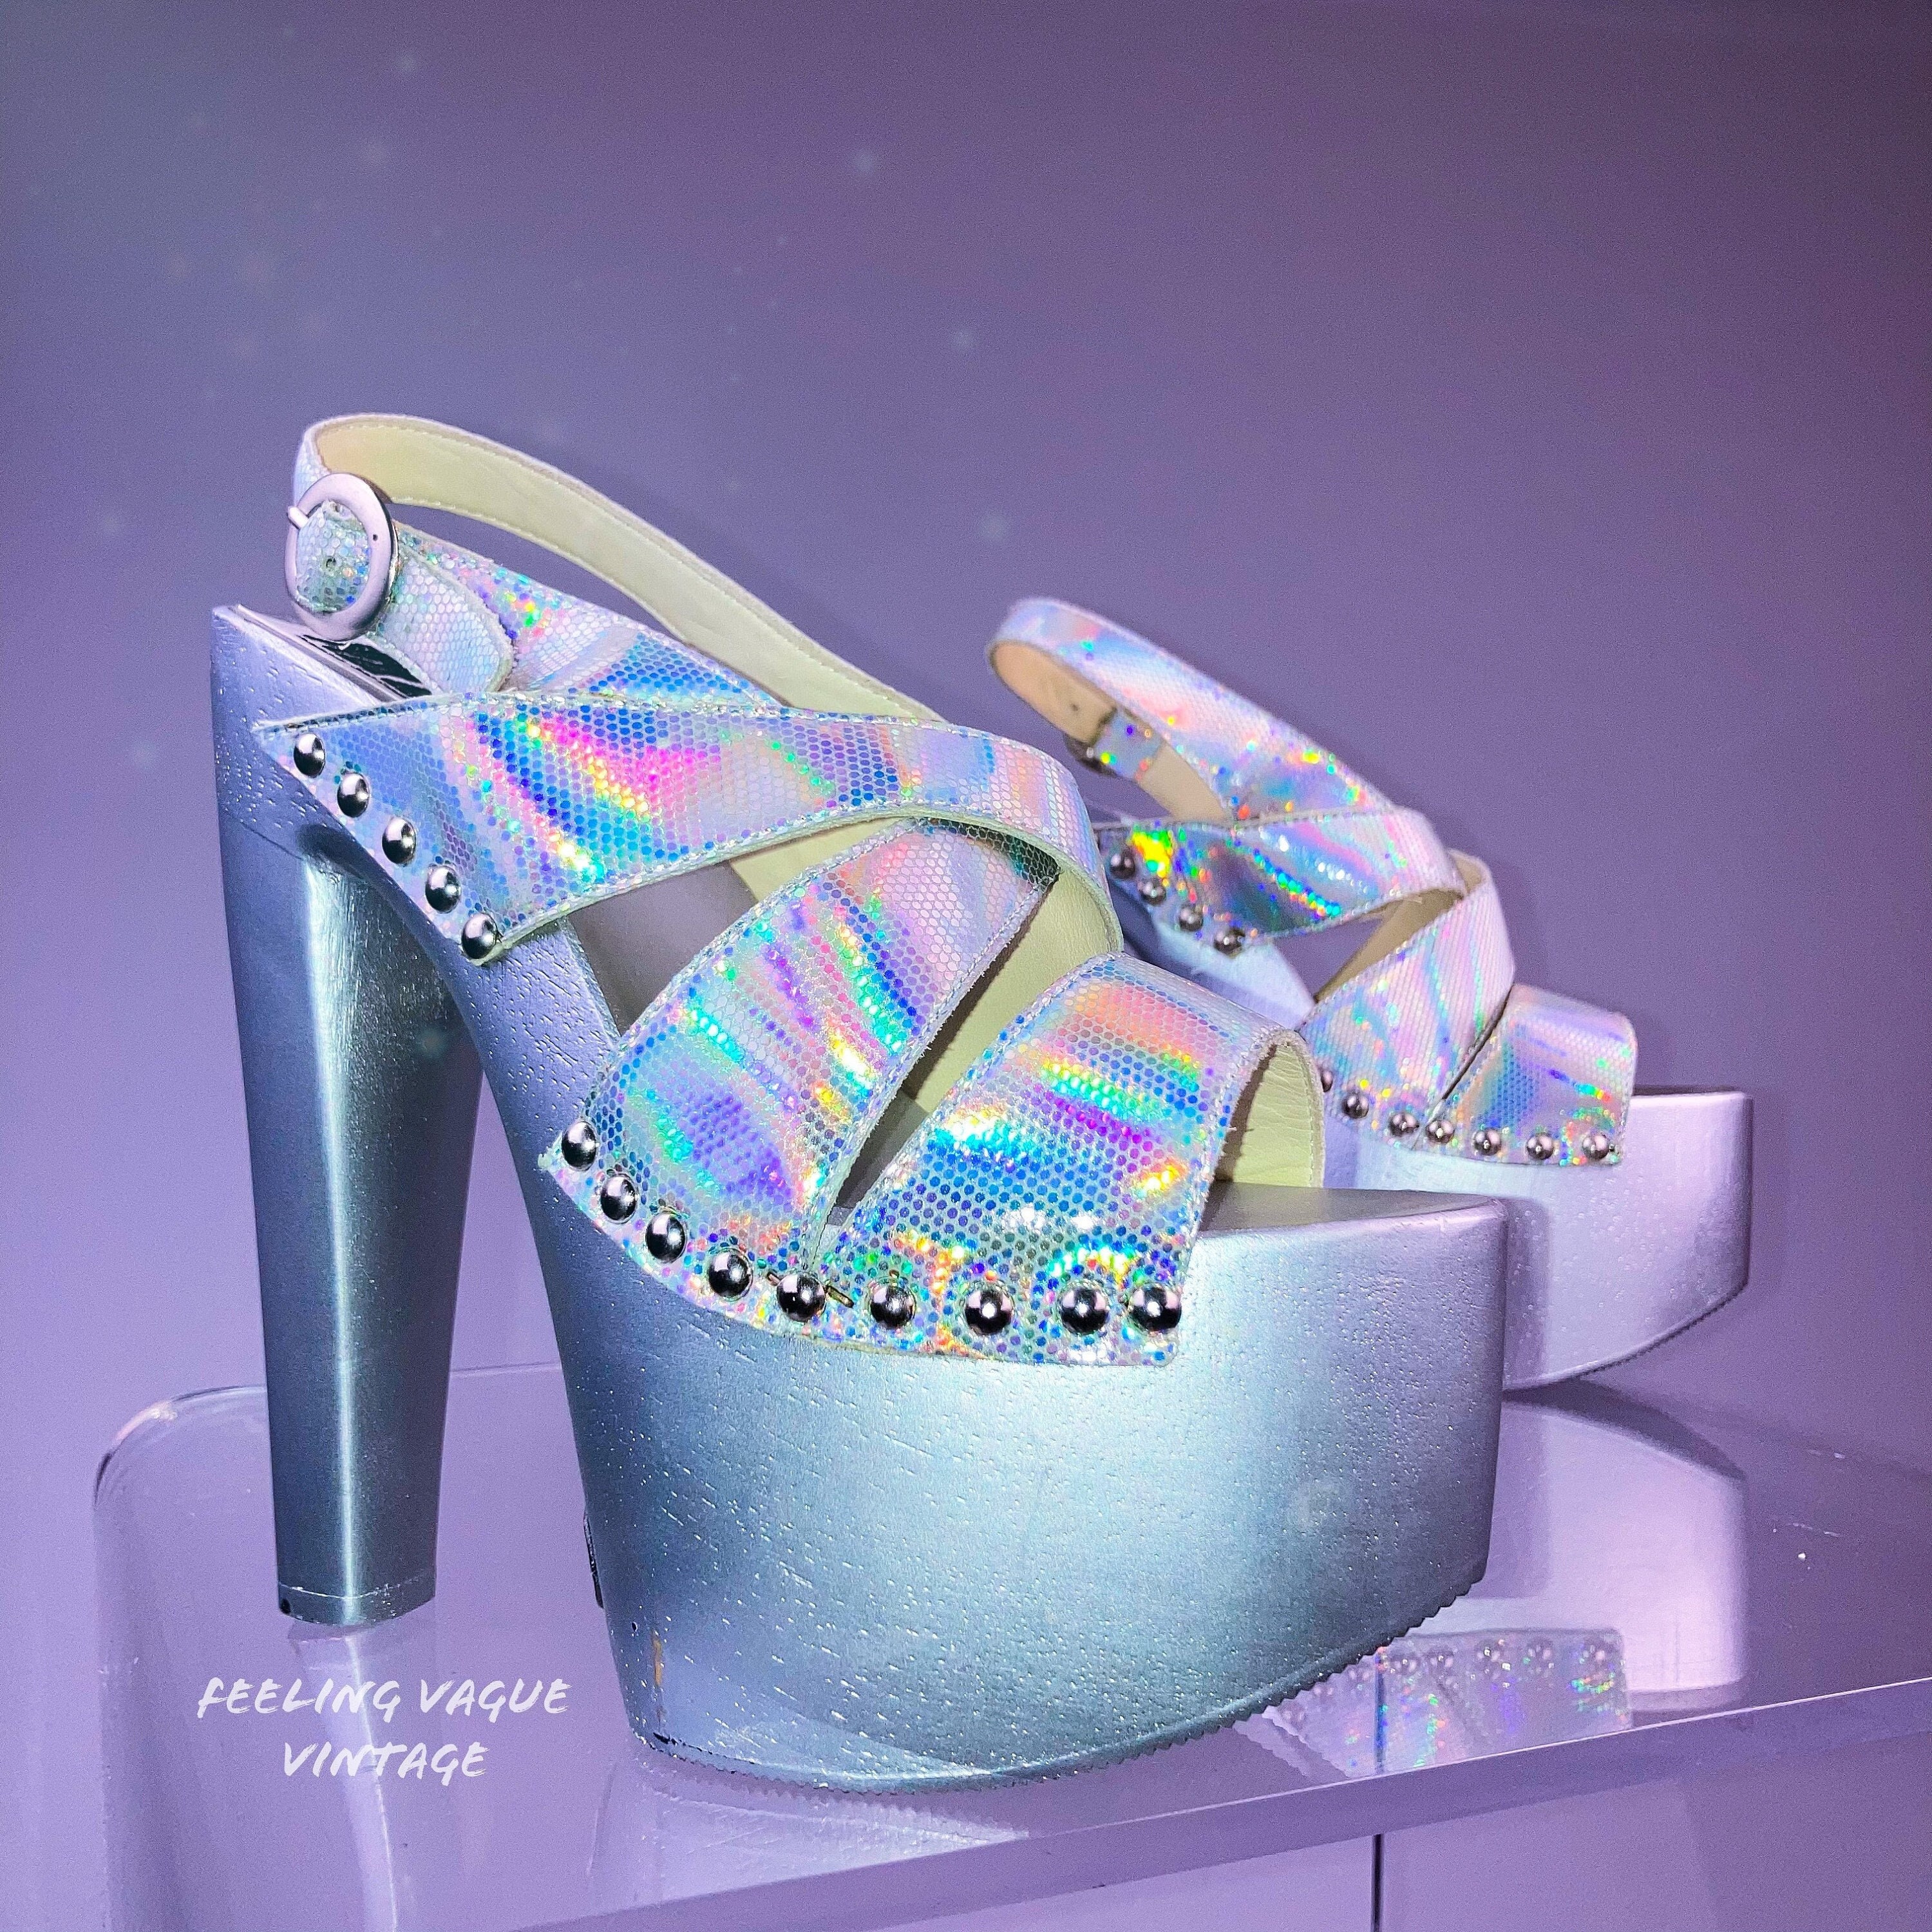 GenShuo Ladies Holographic High heel Open Toe Shoes Uk Size 7 | eBay